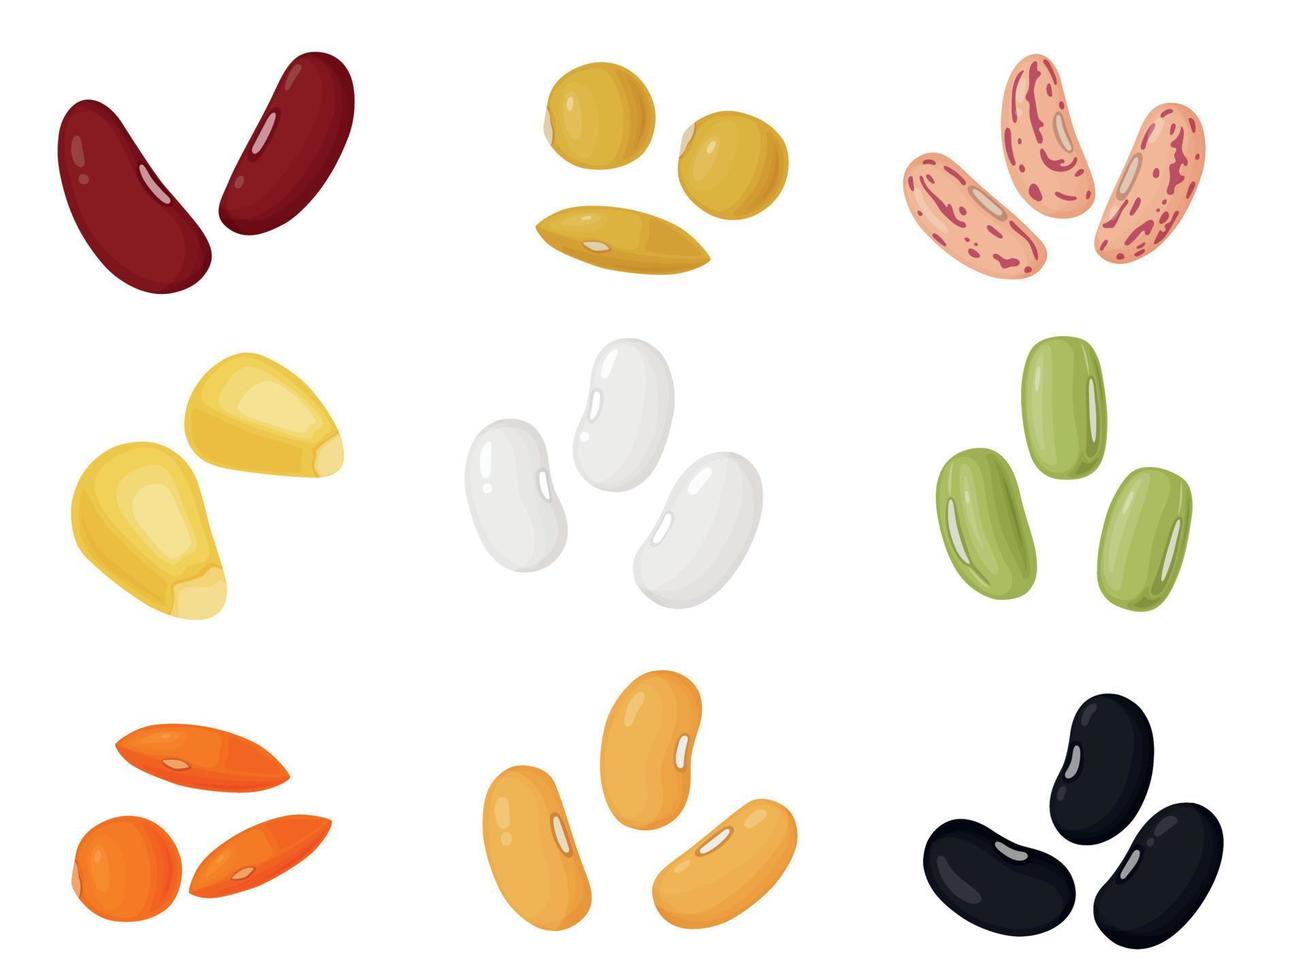 Kidney beans. Beans in cartoon style. Healthy vegetarian food illustration. vector